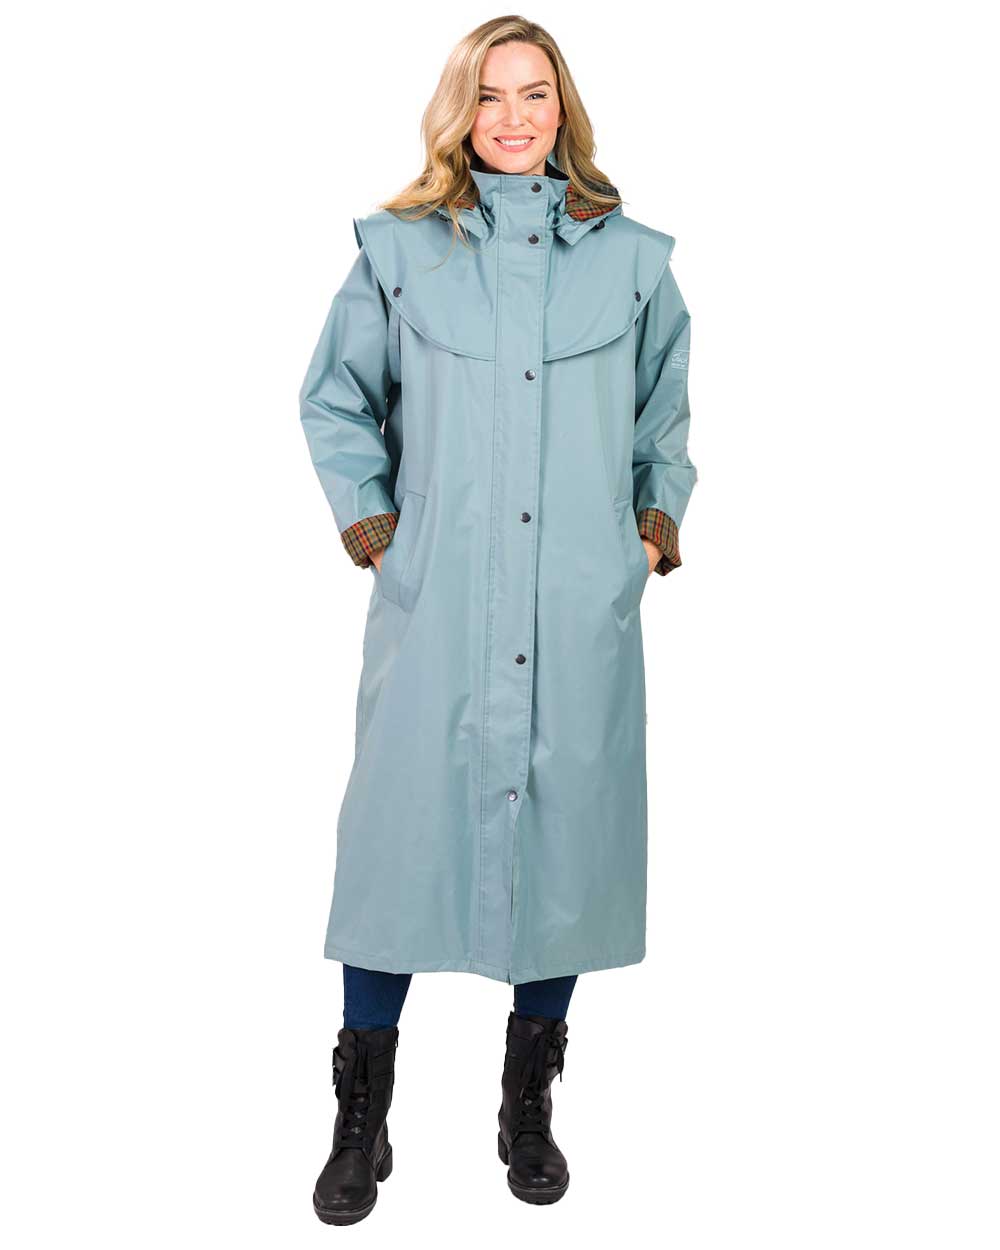 Jack Murphy Malvern Ladies Waterproof Bush Coat in Smokey Blue 